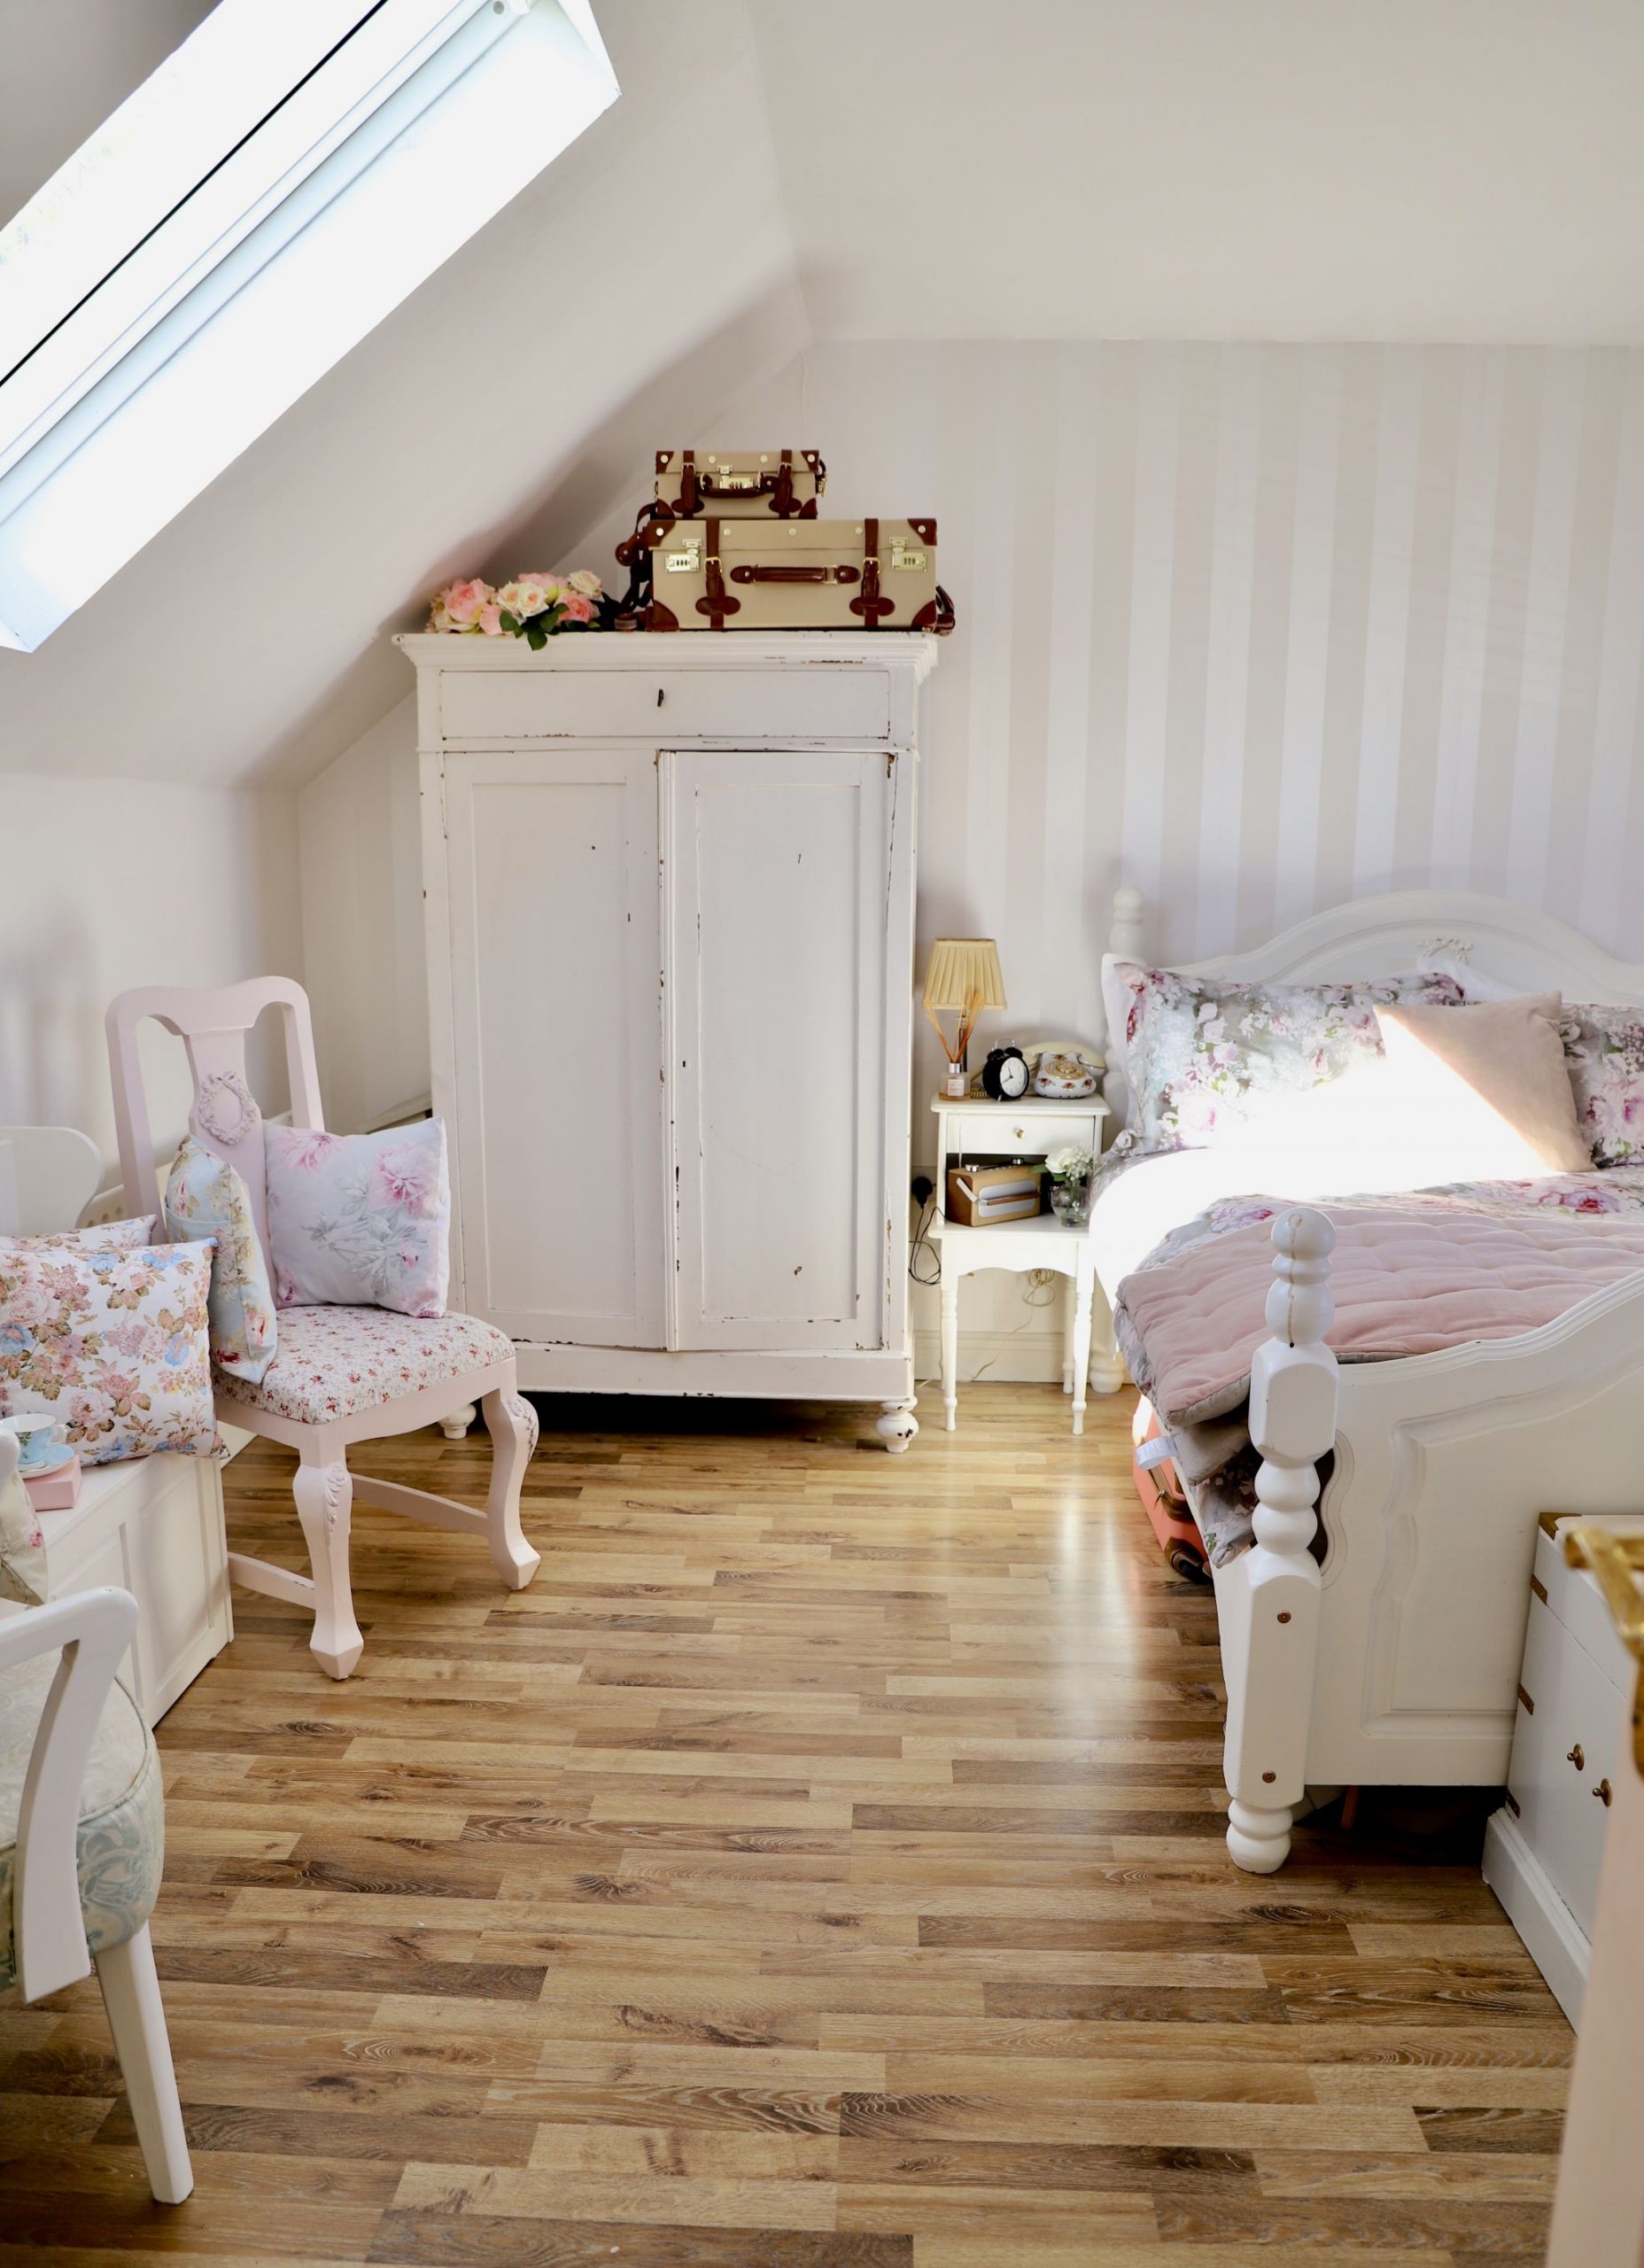 Master bedroom cottage style decor